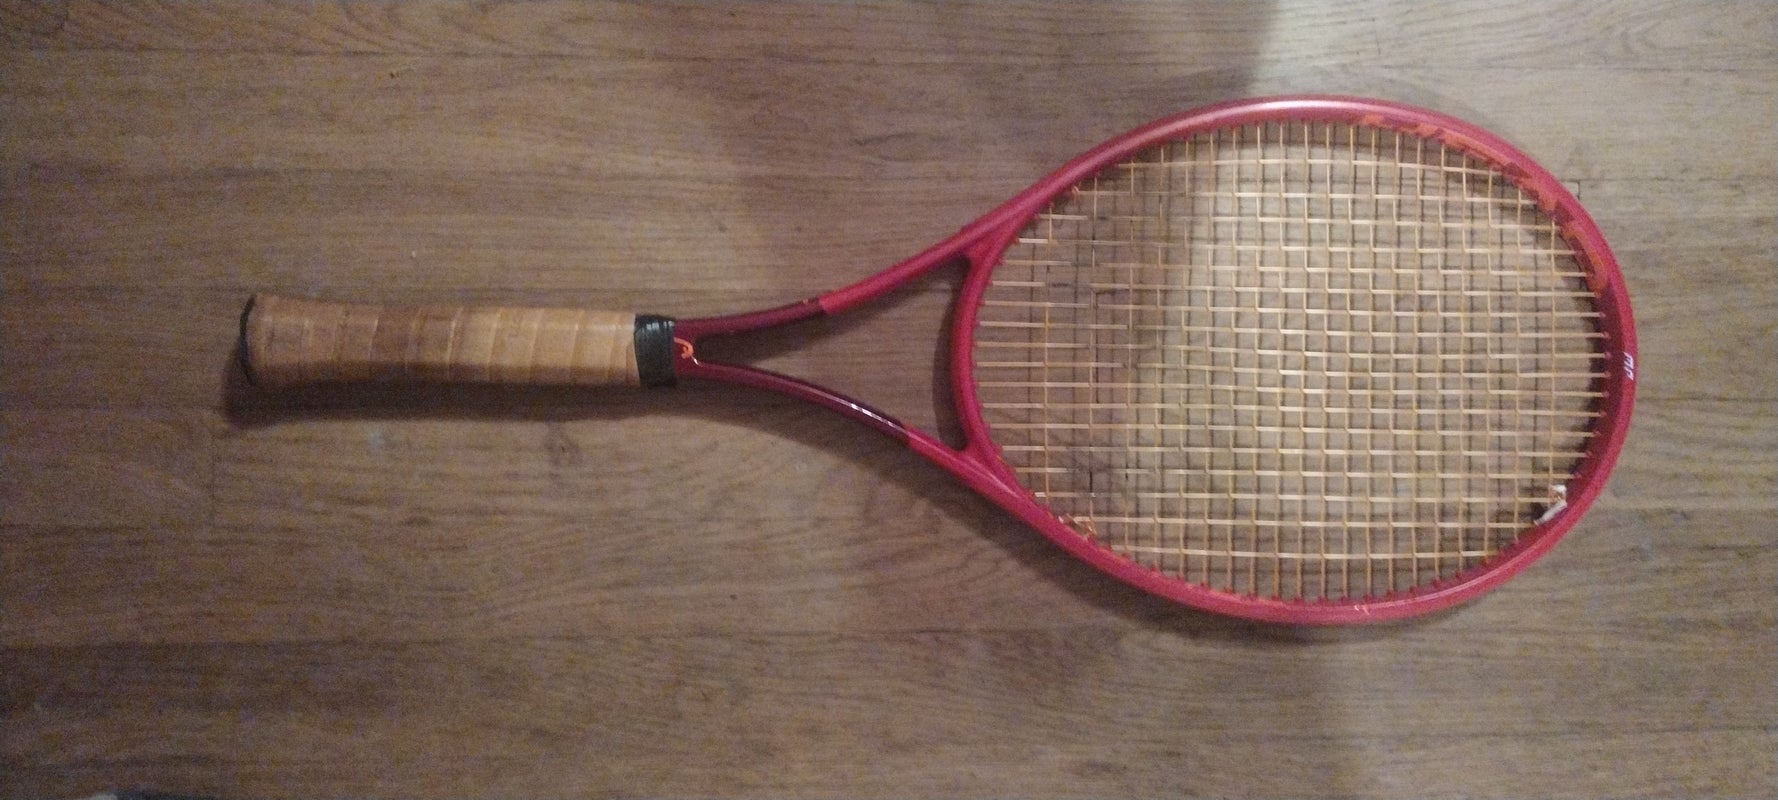 Used HEAD Graphene 360+ Prestige Mid Tennis Racquet